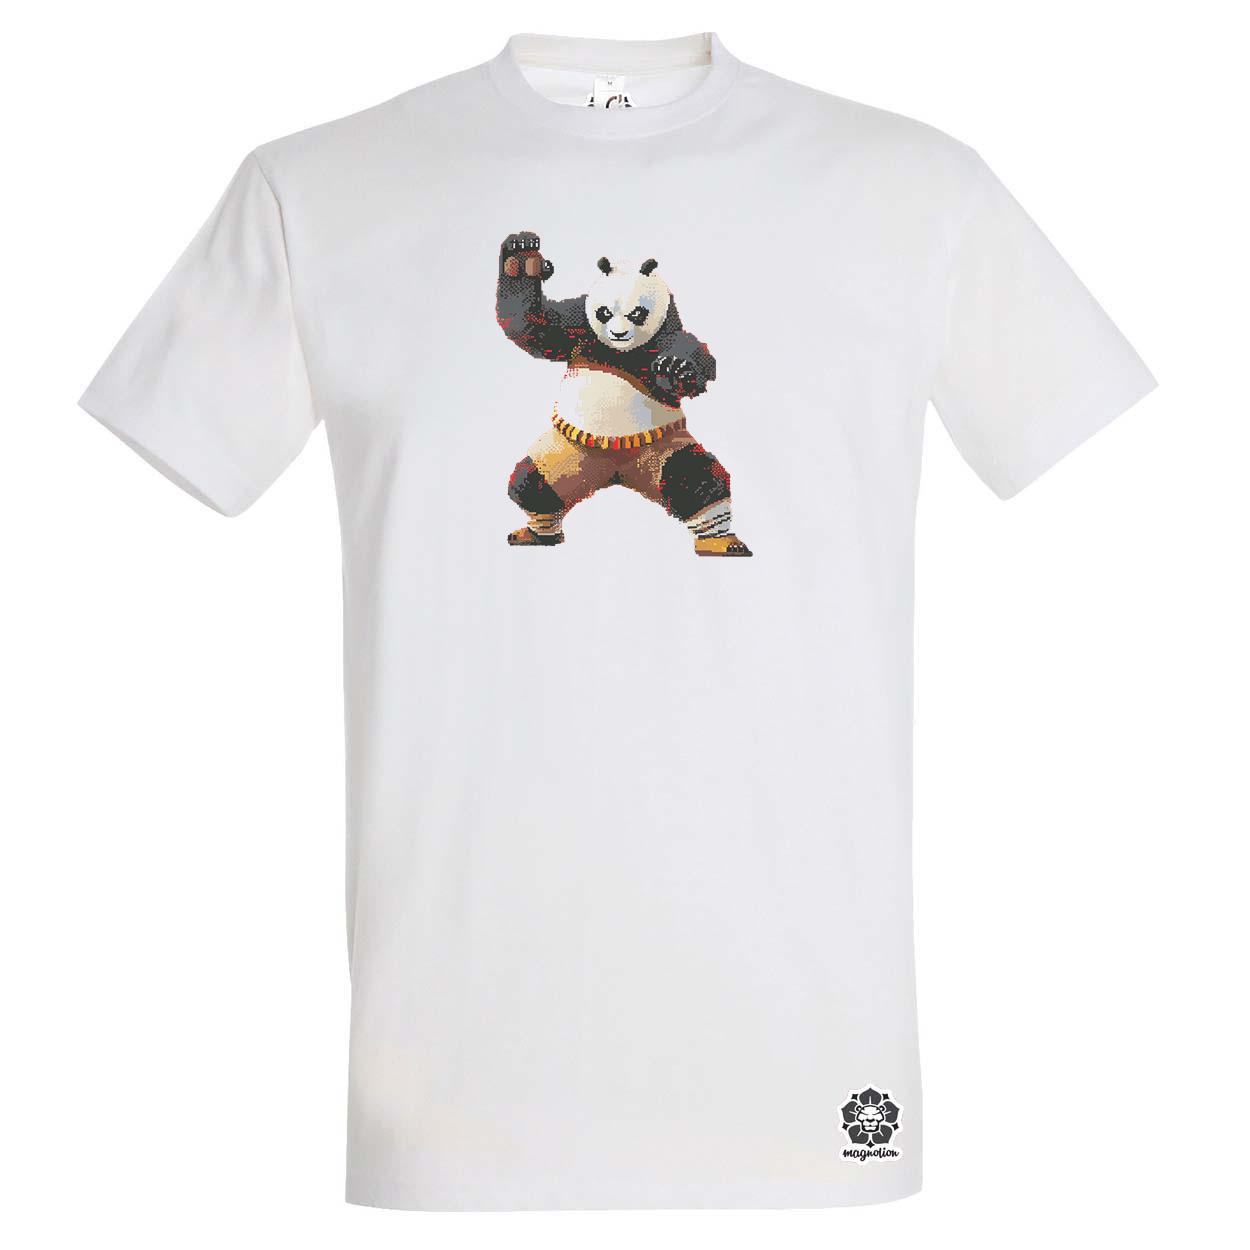 Pixelart kung fu panda v2